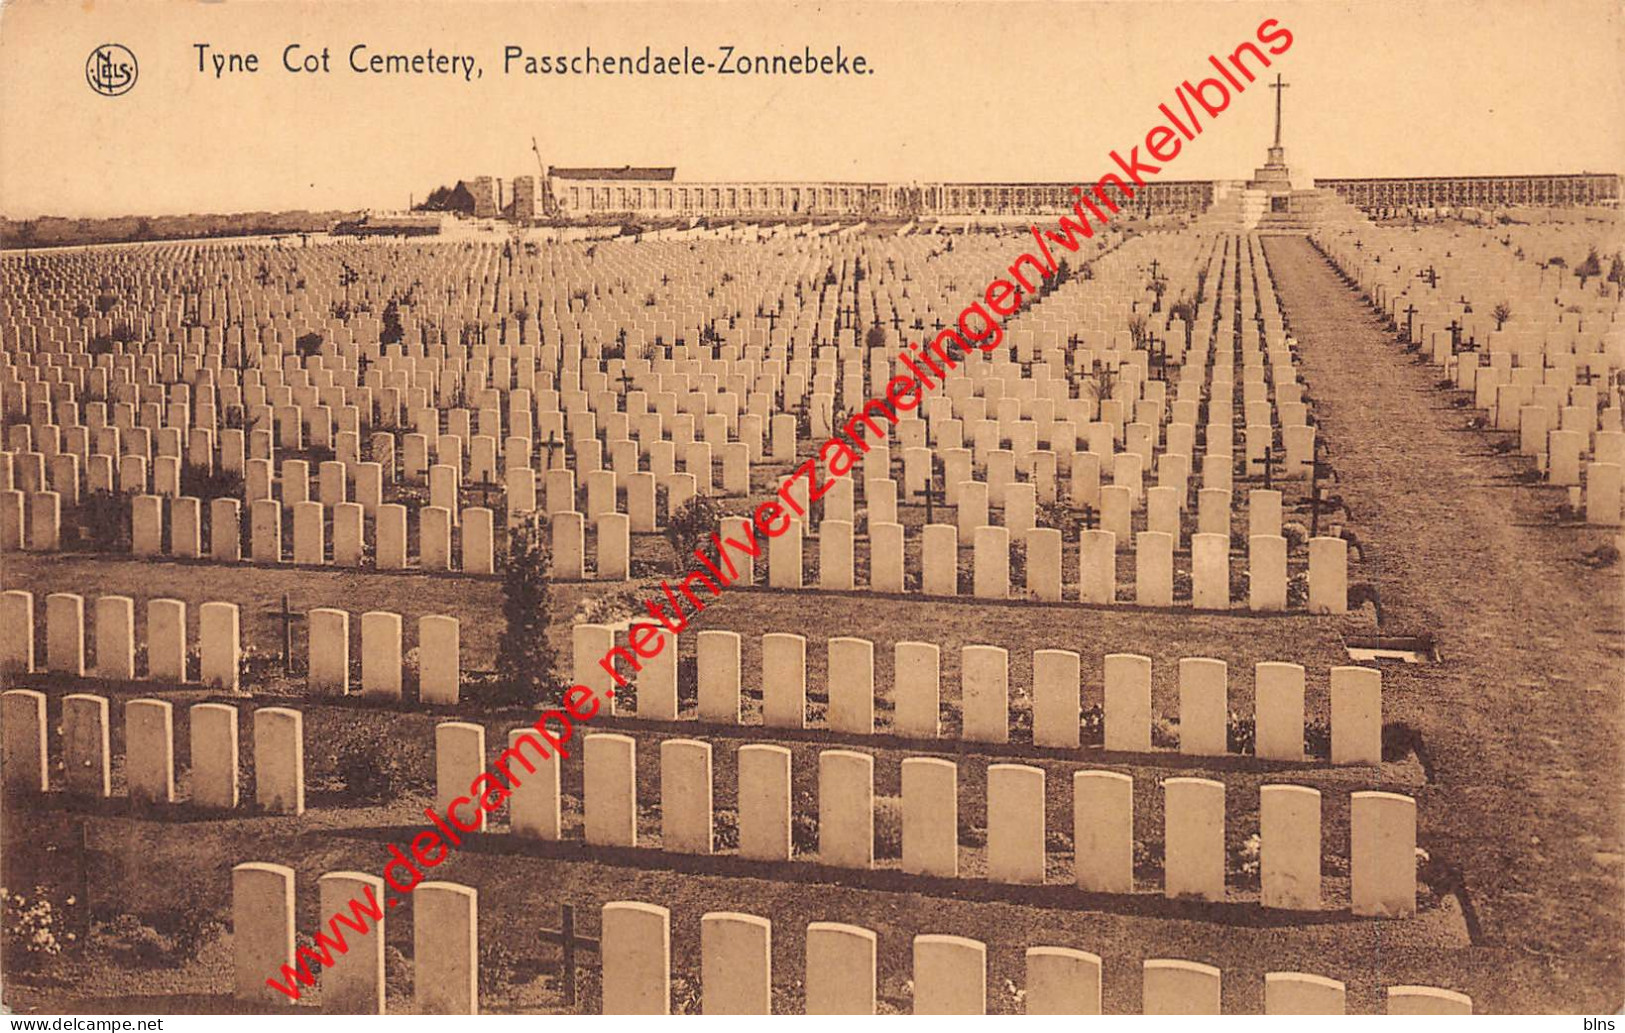 Tyne Cot Cemetery - Passchendaele-Zonnebeke - Passendale - Zonnebeke